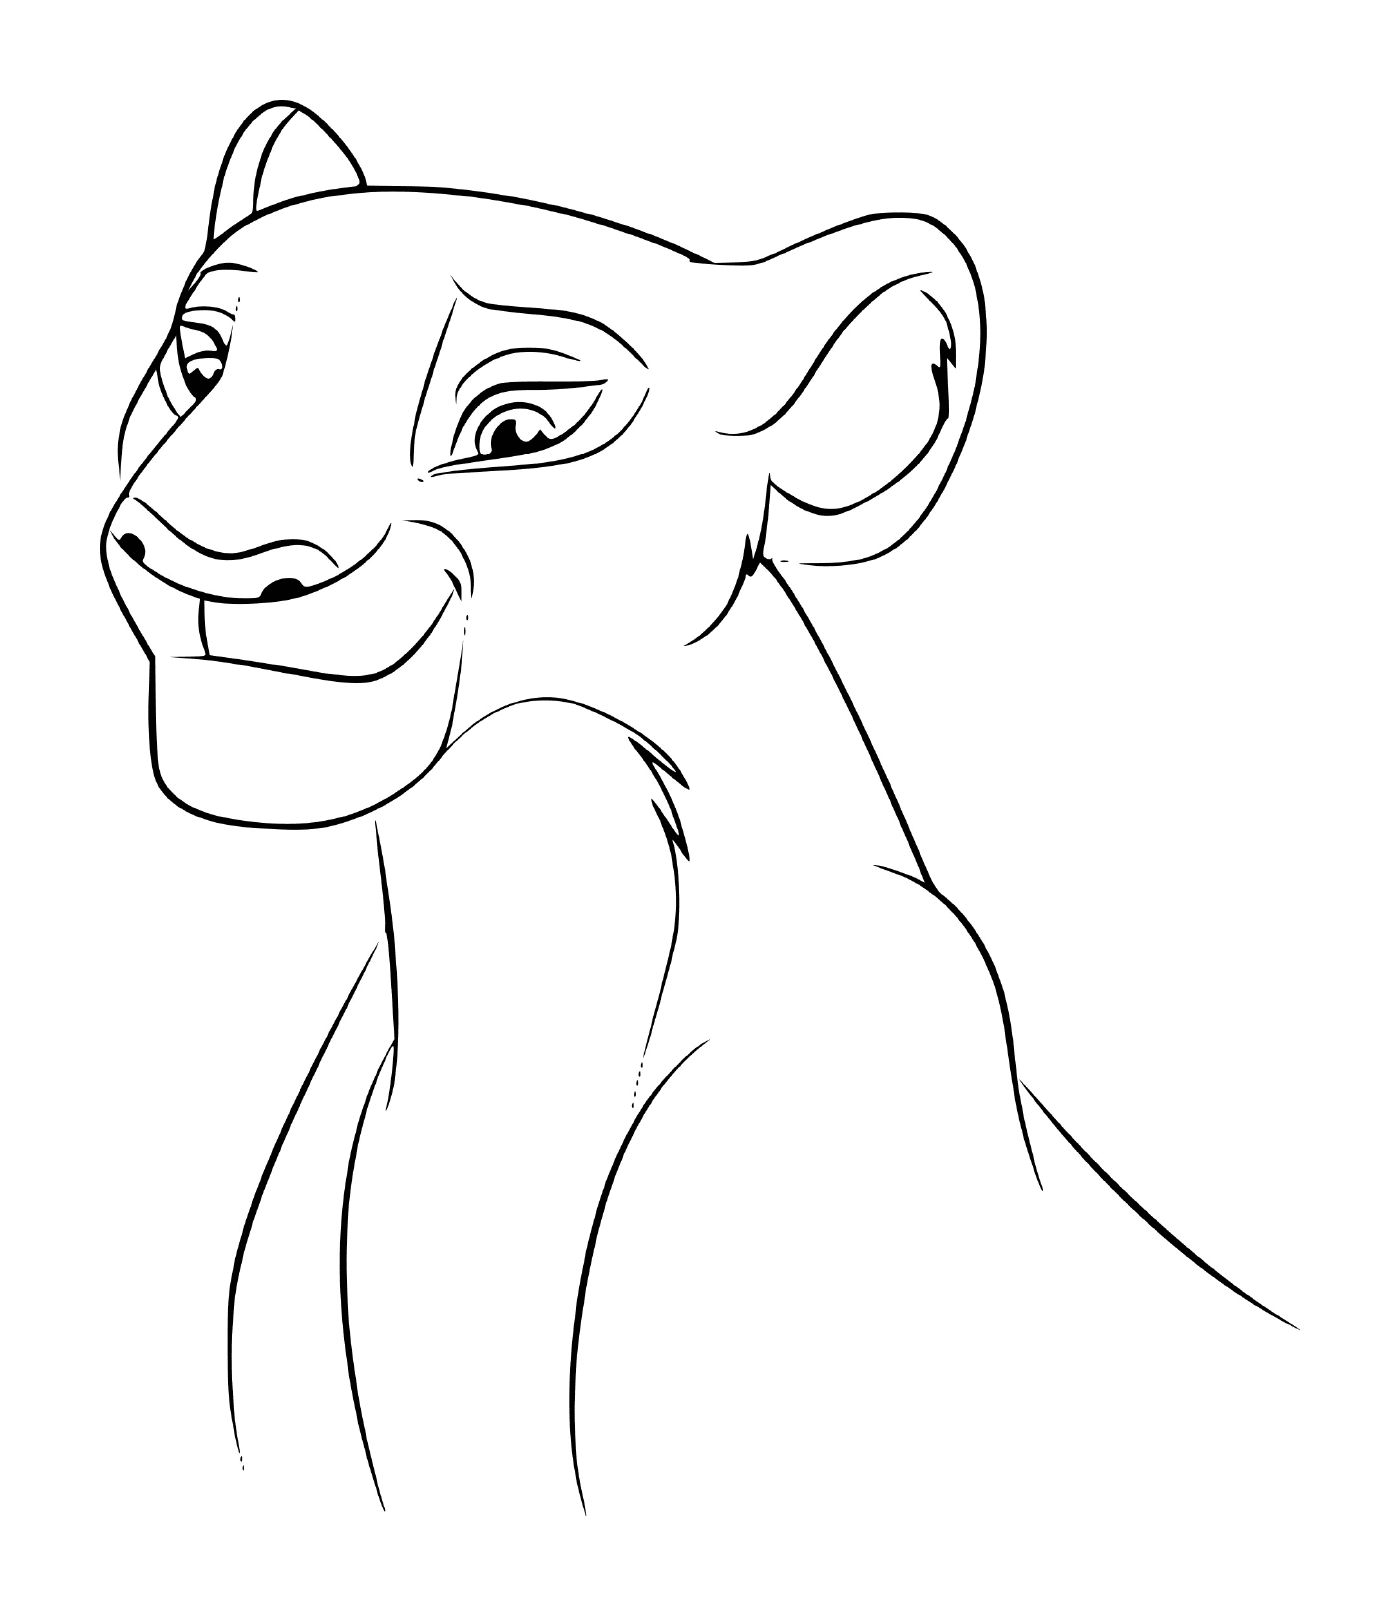  Nala of the Lion King of Disney 